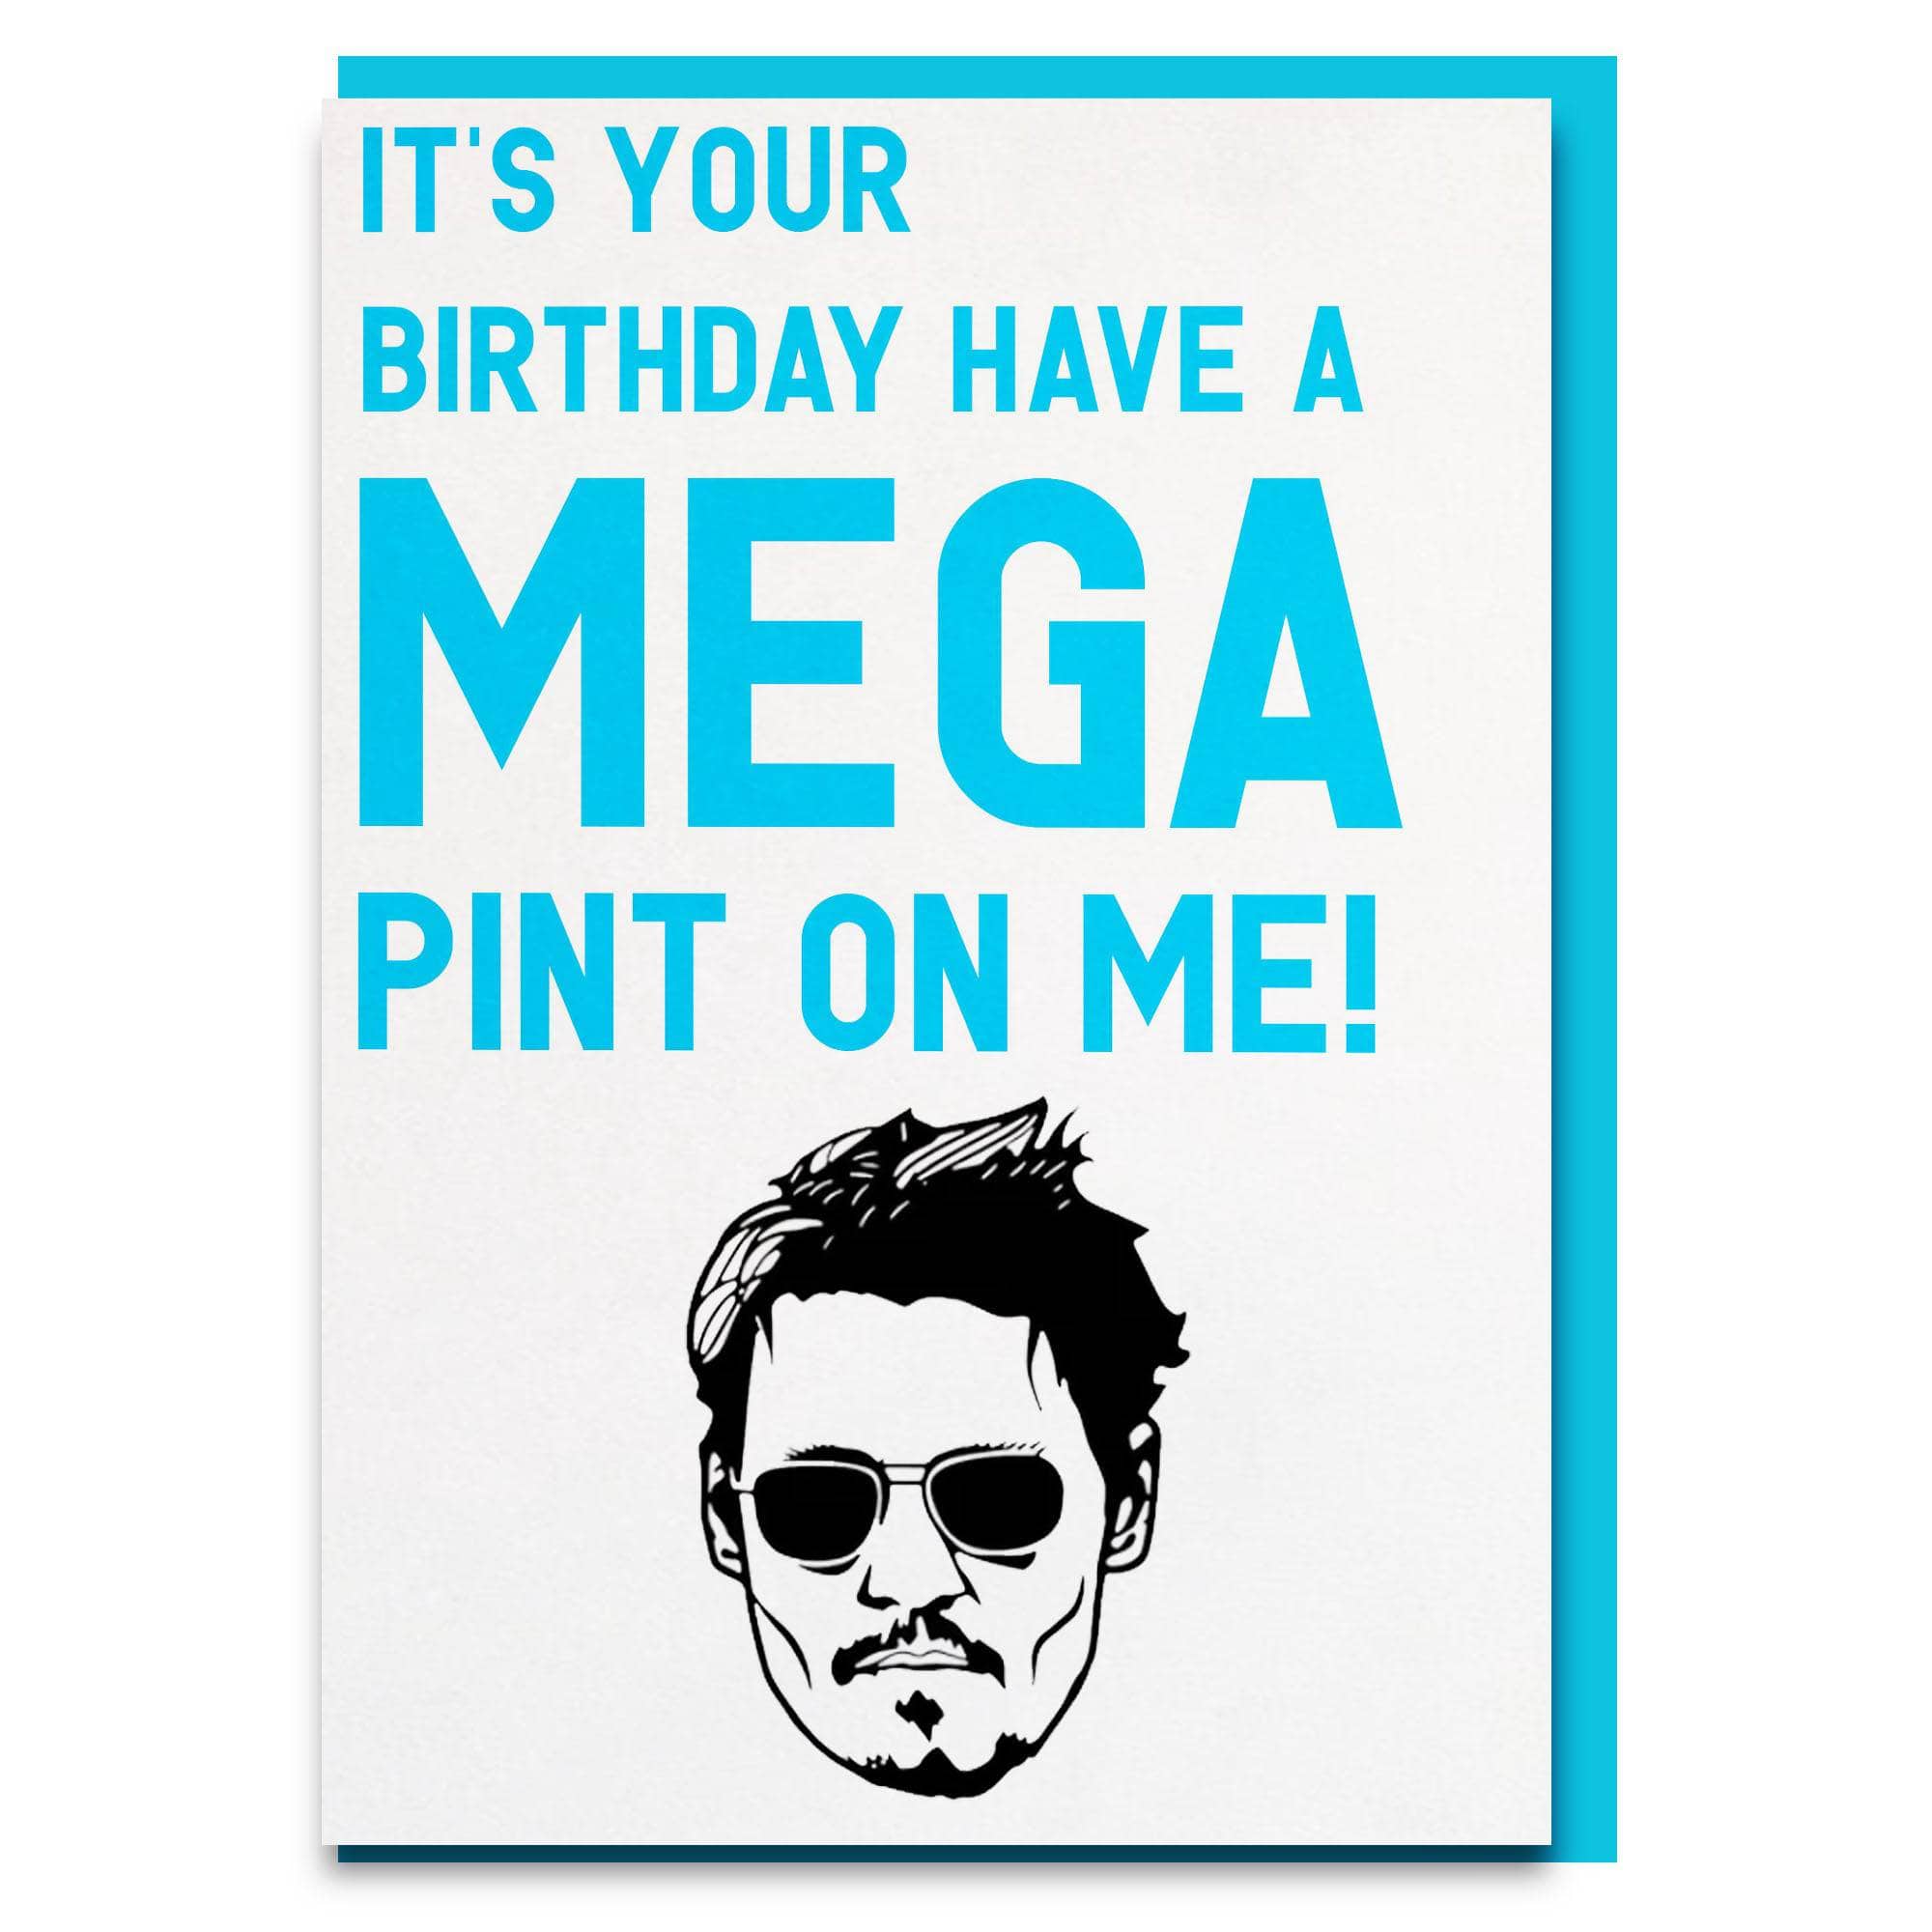 funny johnny deep mega pint birthday card